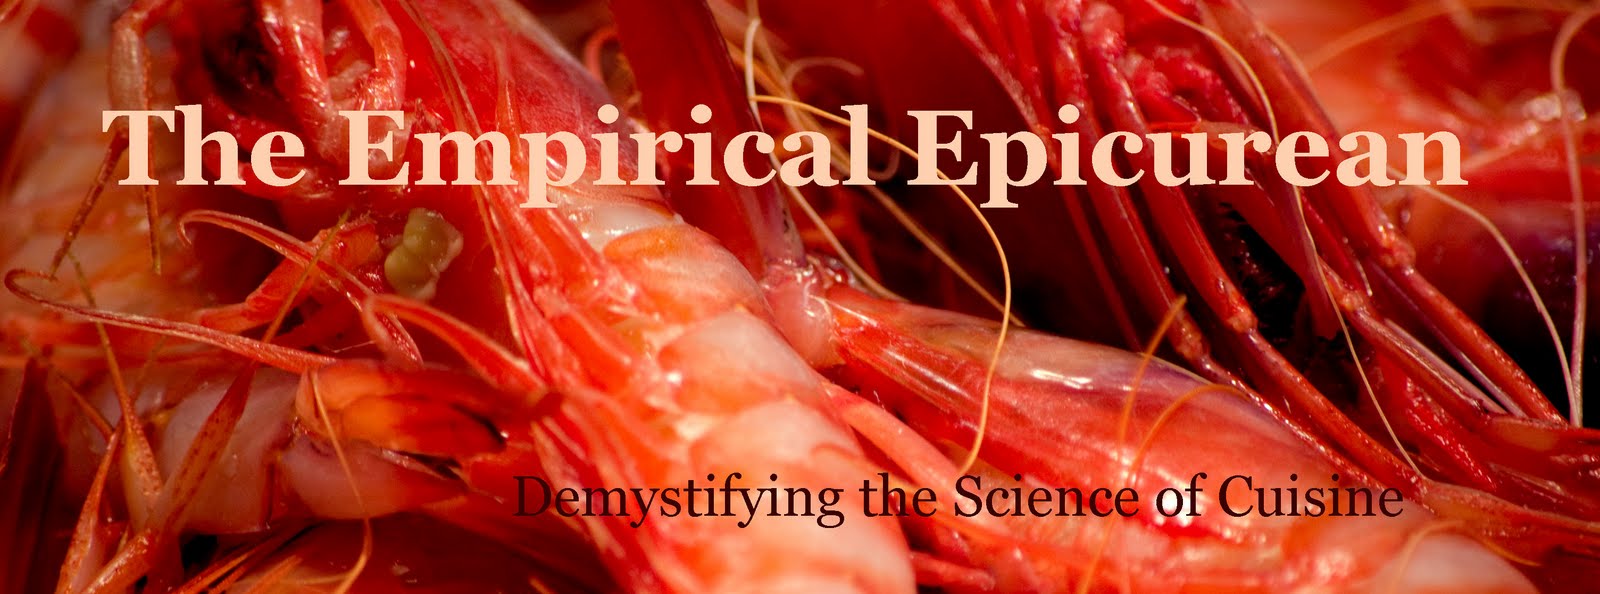 The Empirical Epicurean